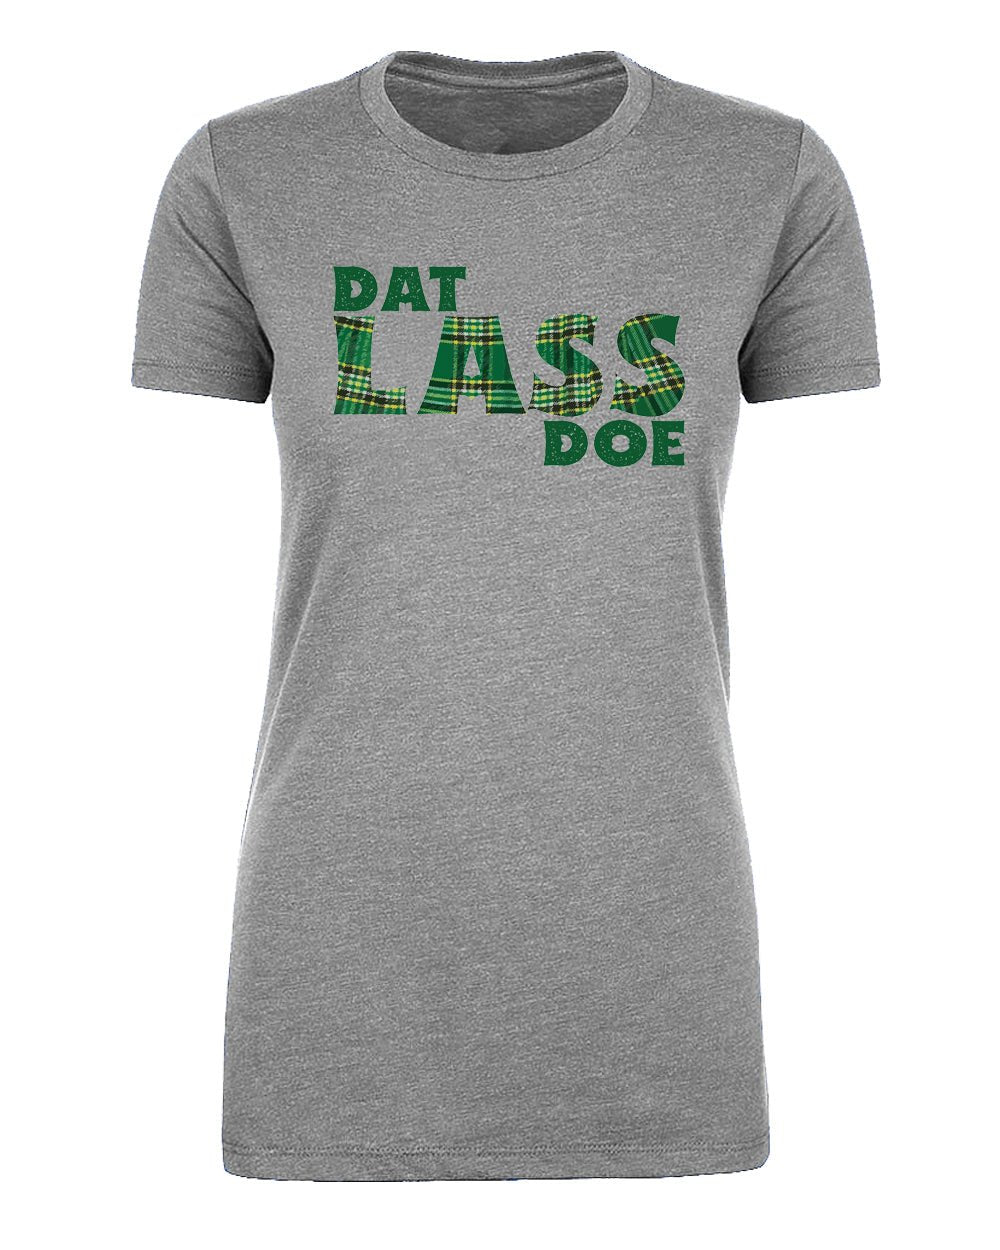 Dat Lass Doe Womens St. Patrick's Day T Shirts - Mato & Hash